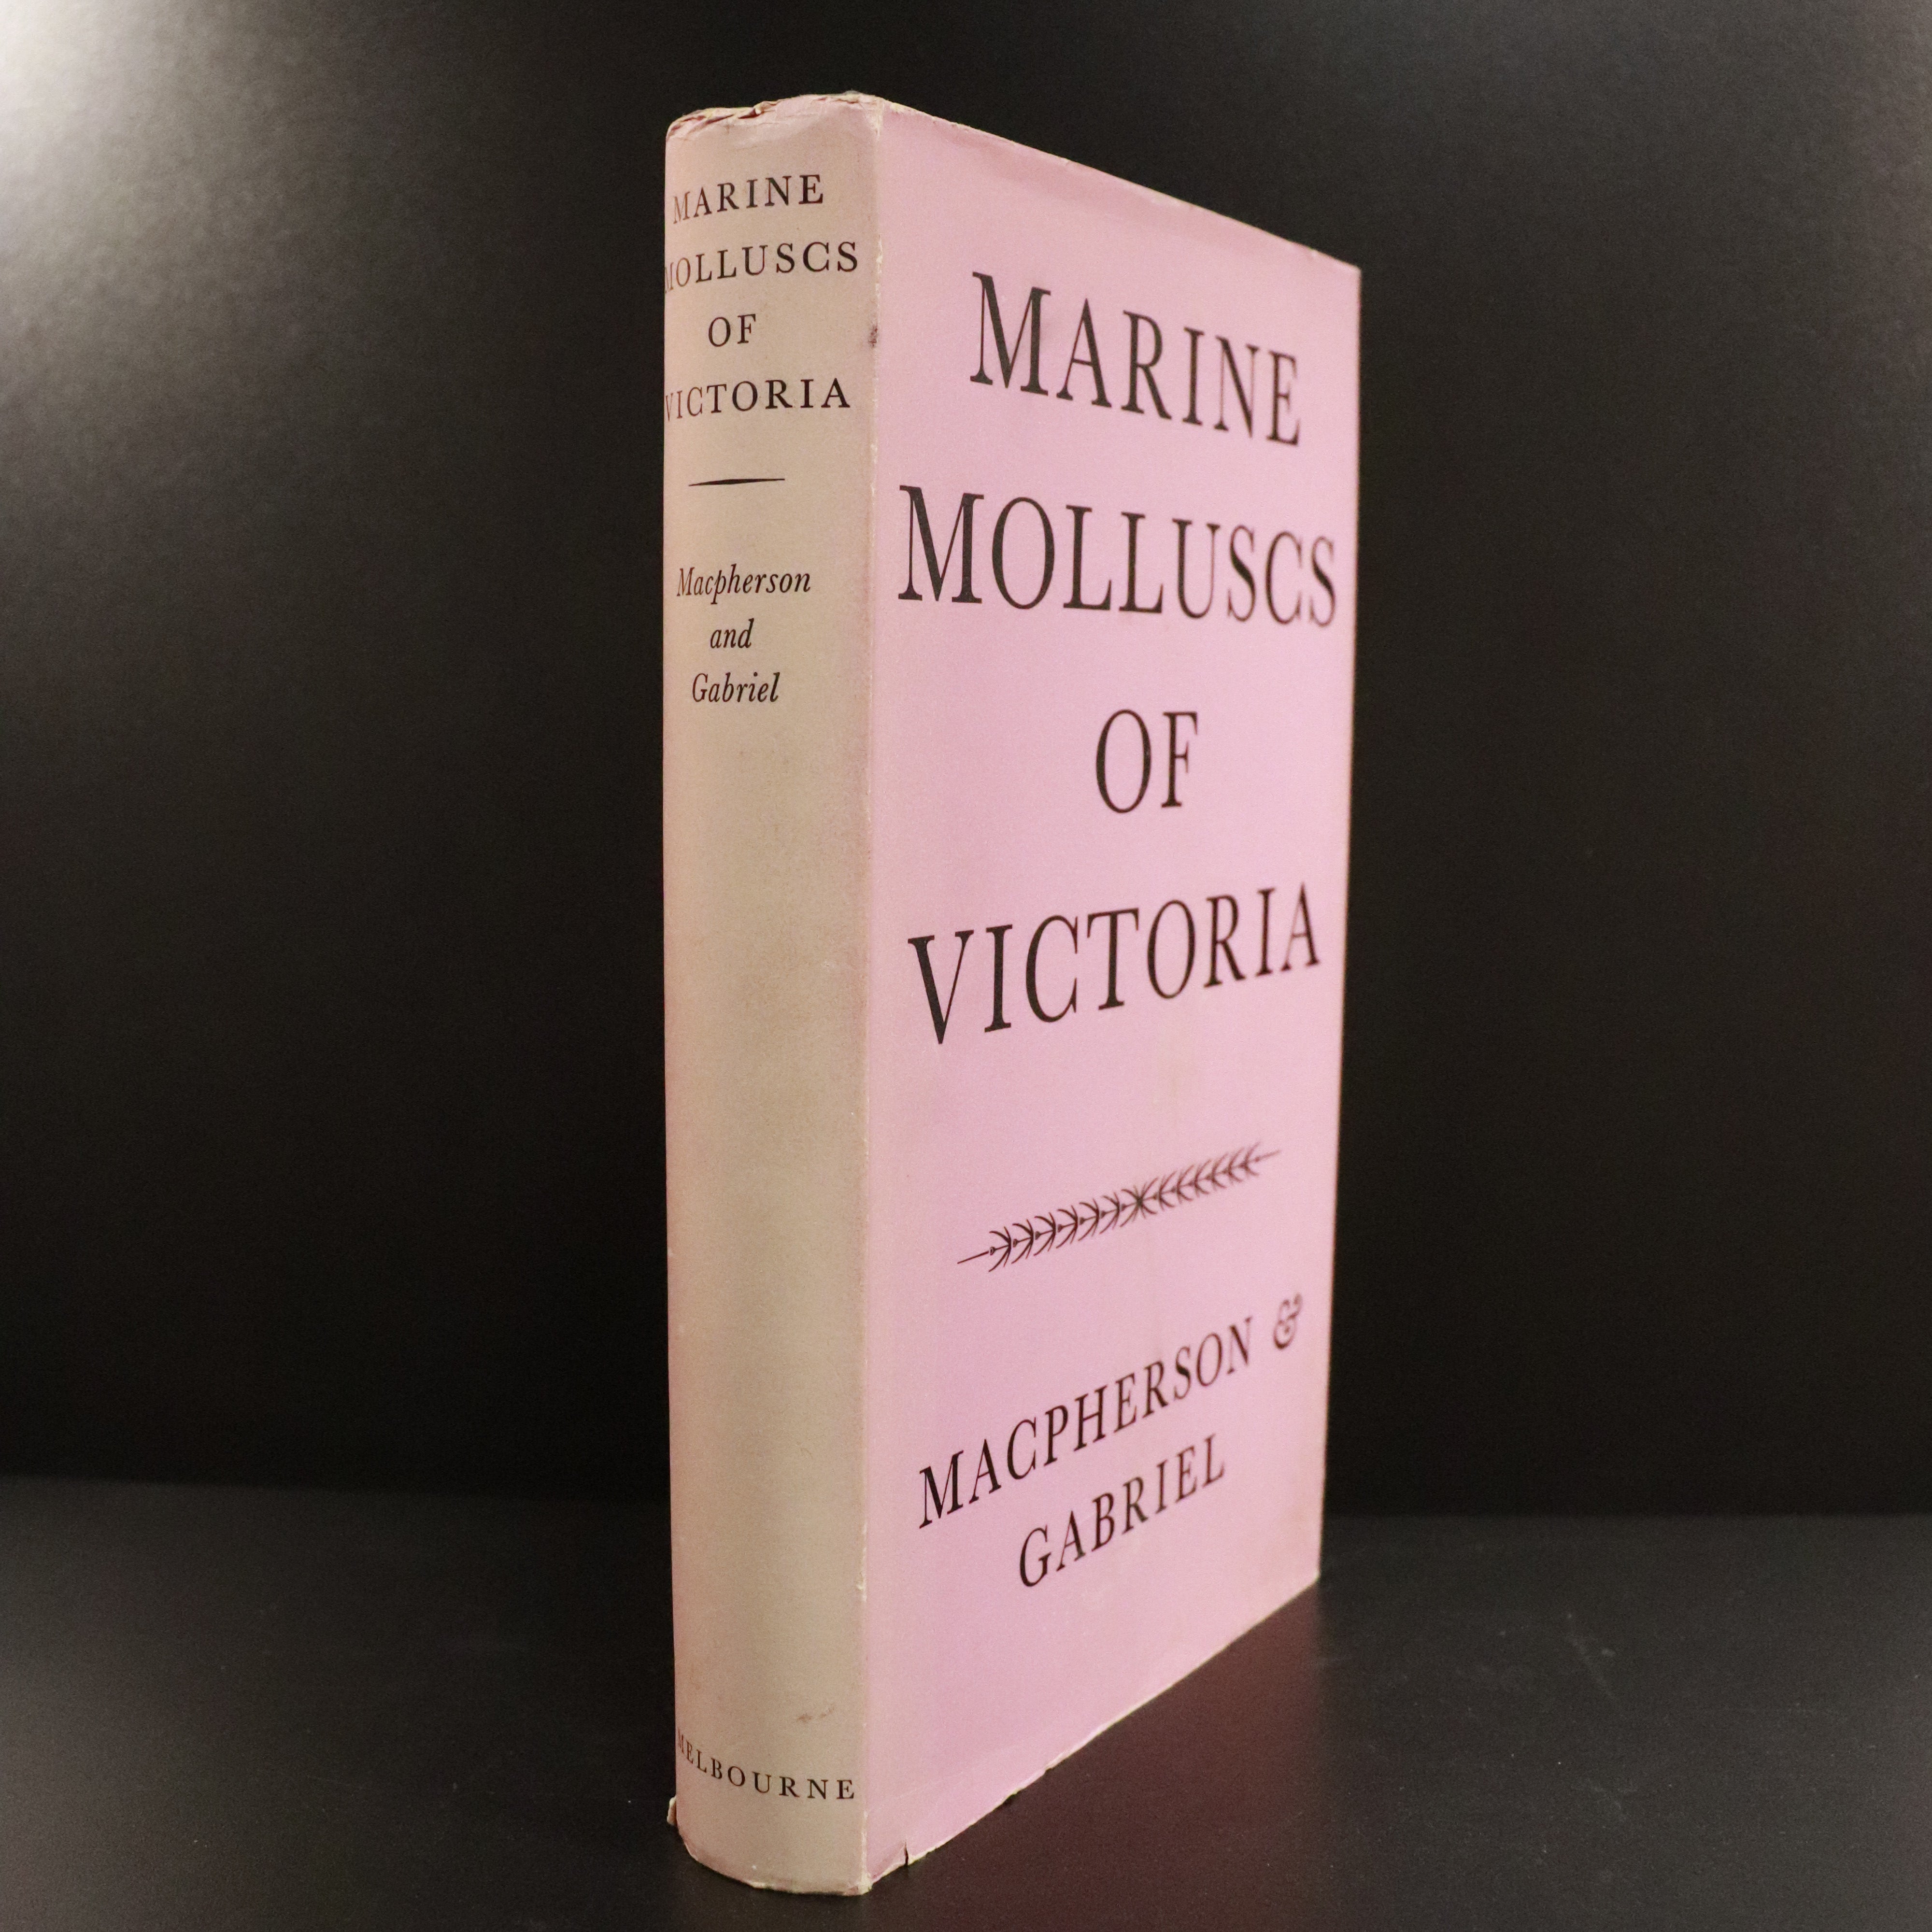 1962 Marine Molluscs Of Victoria by J Macpherson Australian Natural History Book